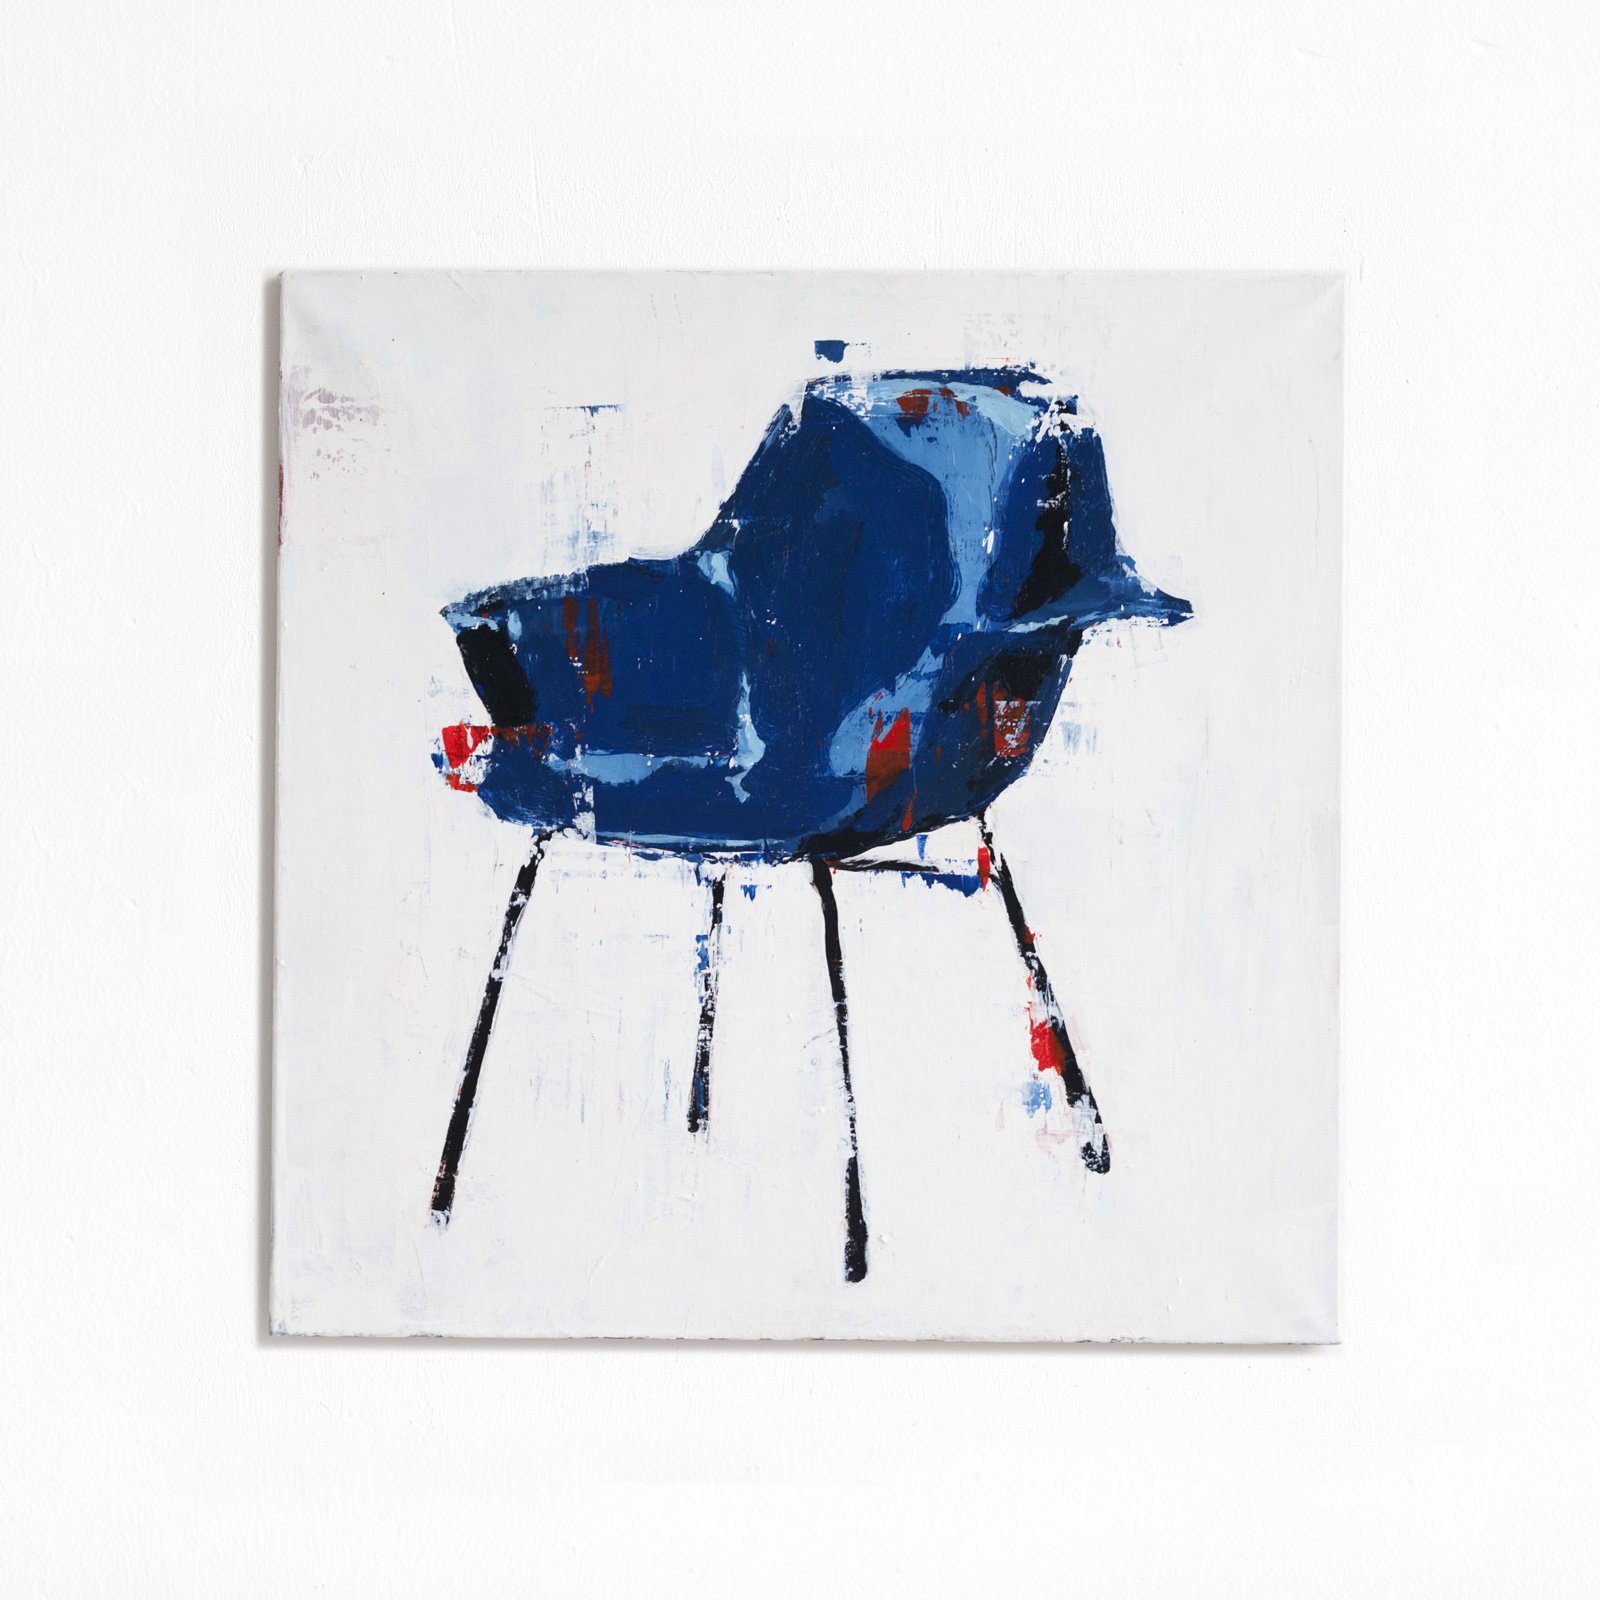 Image: Blue Chair, by Misha Nikatin